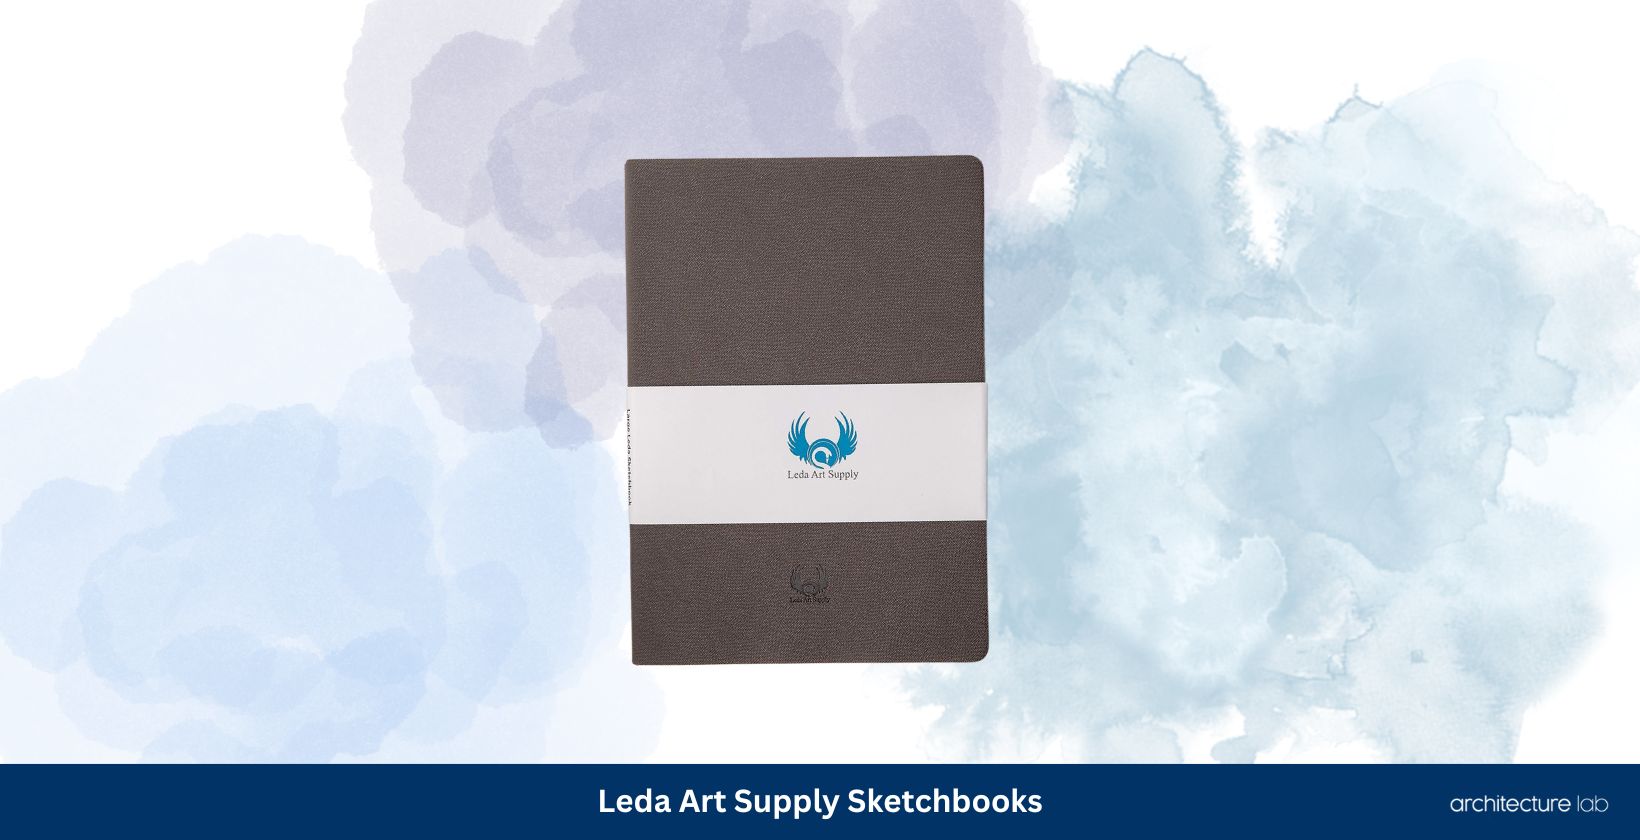 Leda art supply sketchbooks